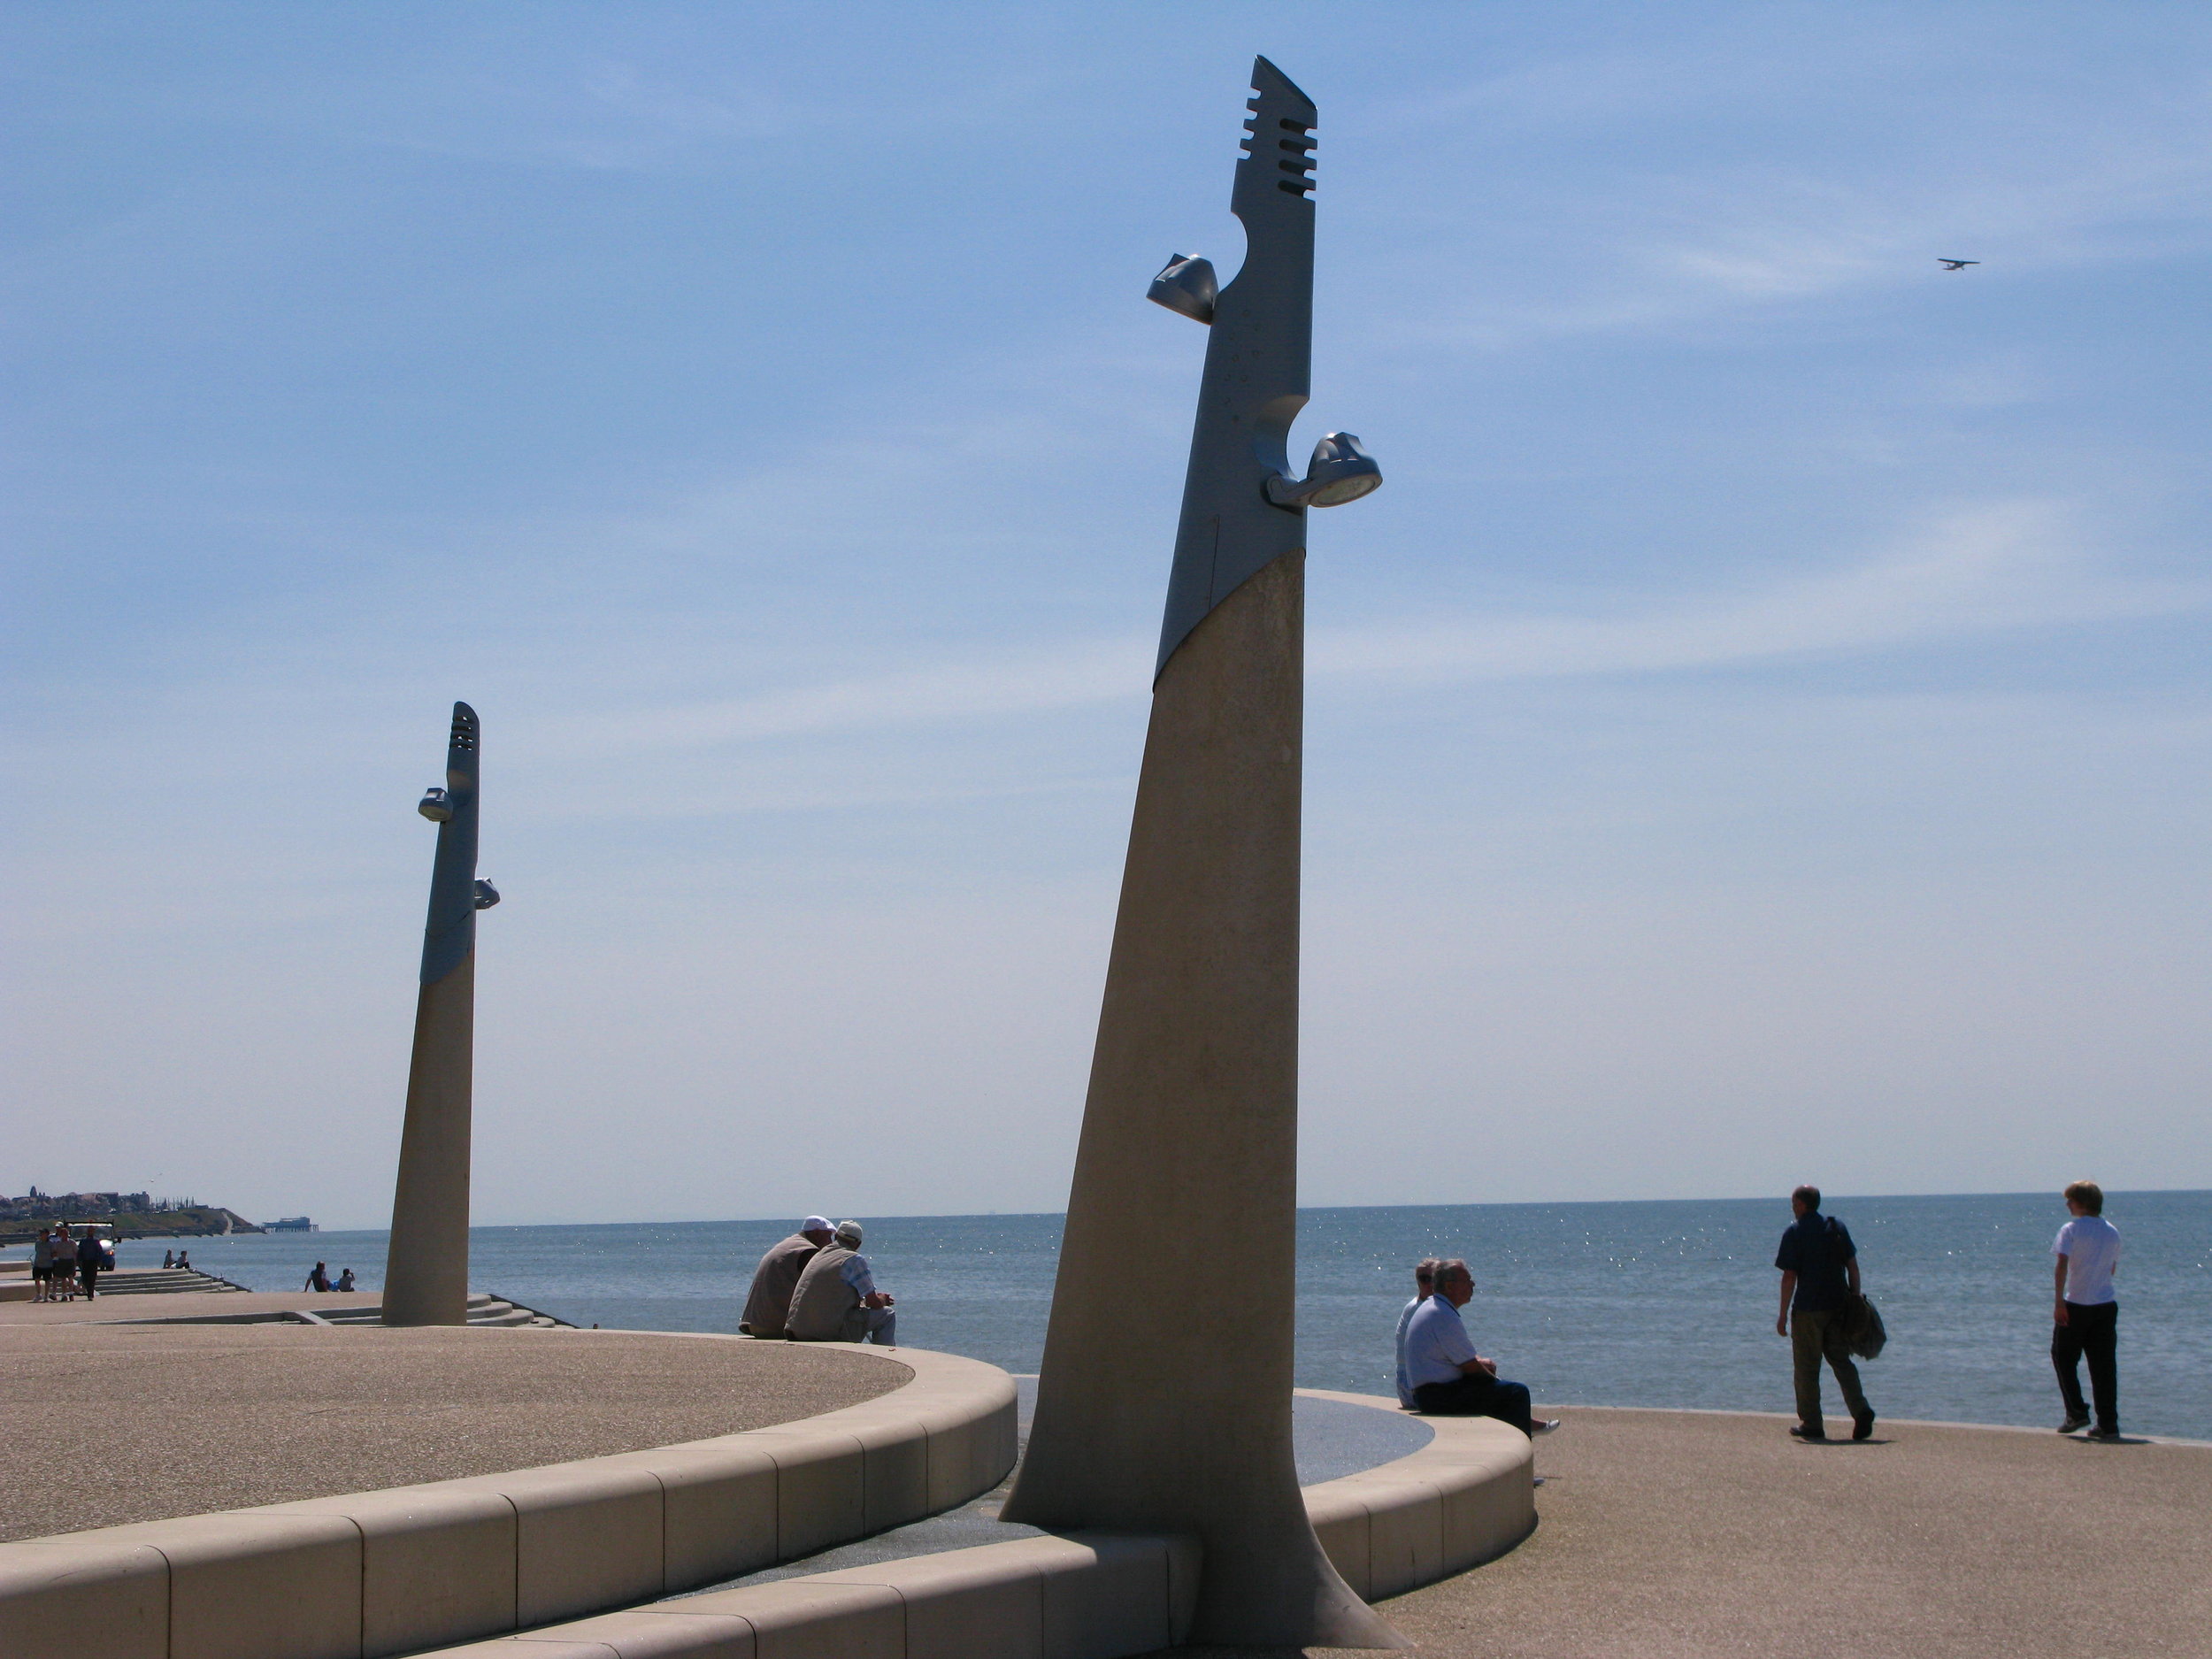 Public Art: Shipwreck Memorial on the Promenade - Visit Cleveleys